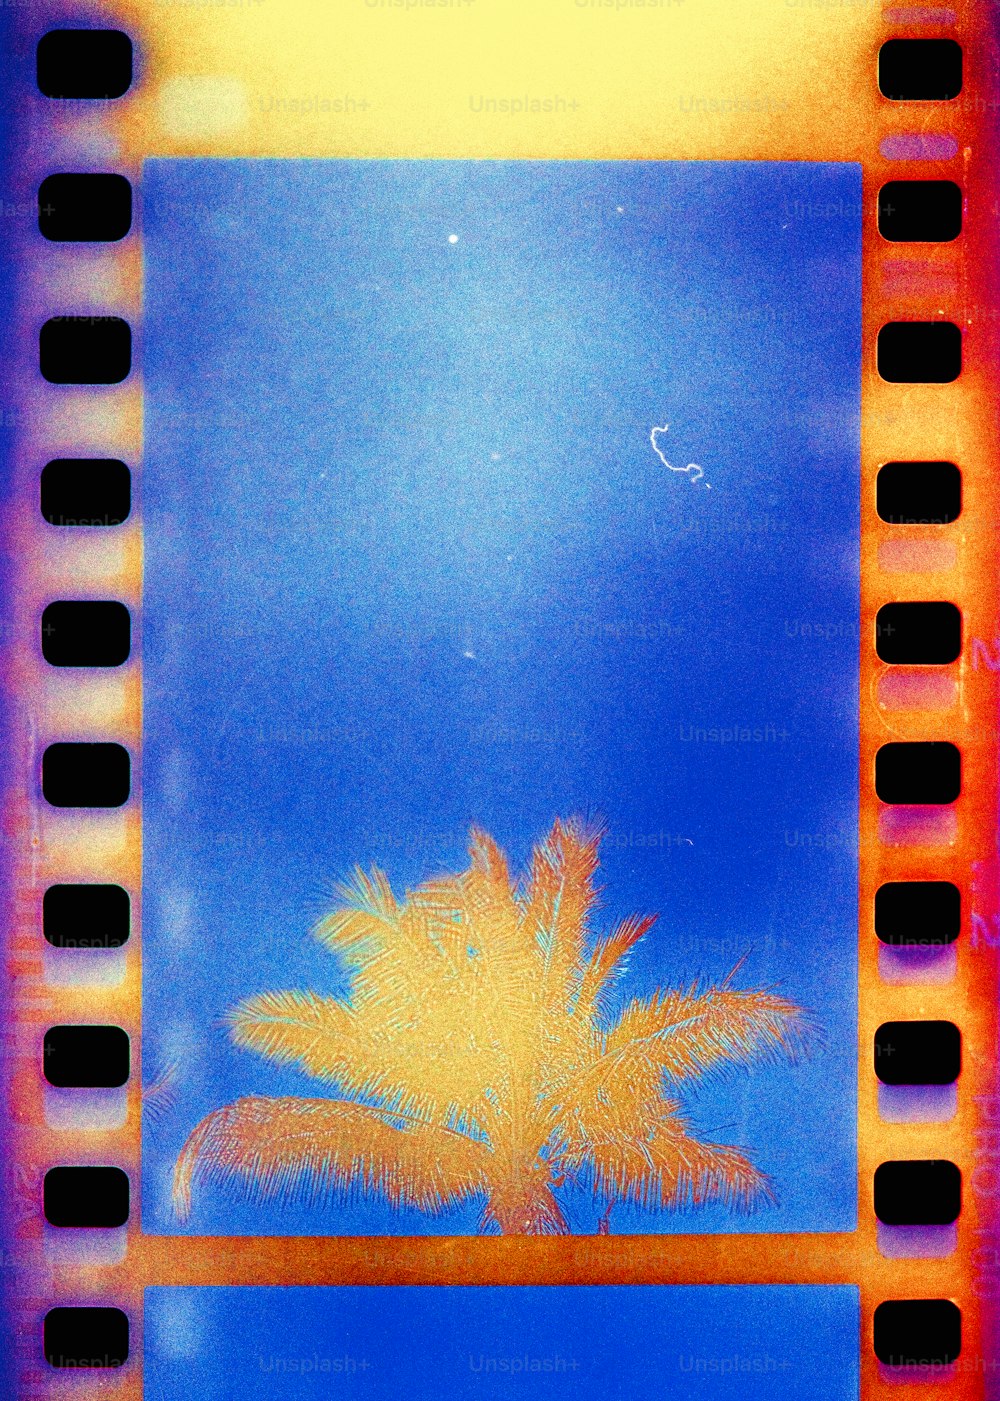 a picture of a palm tree taken through a film strip